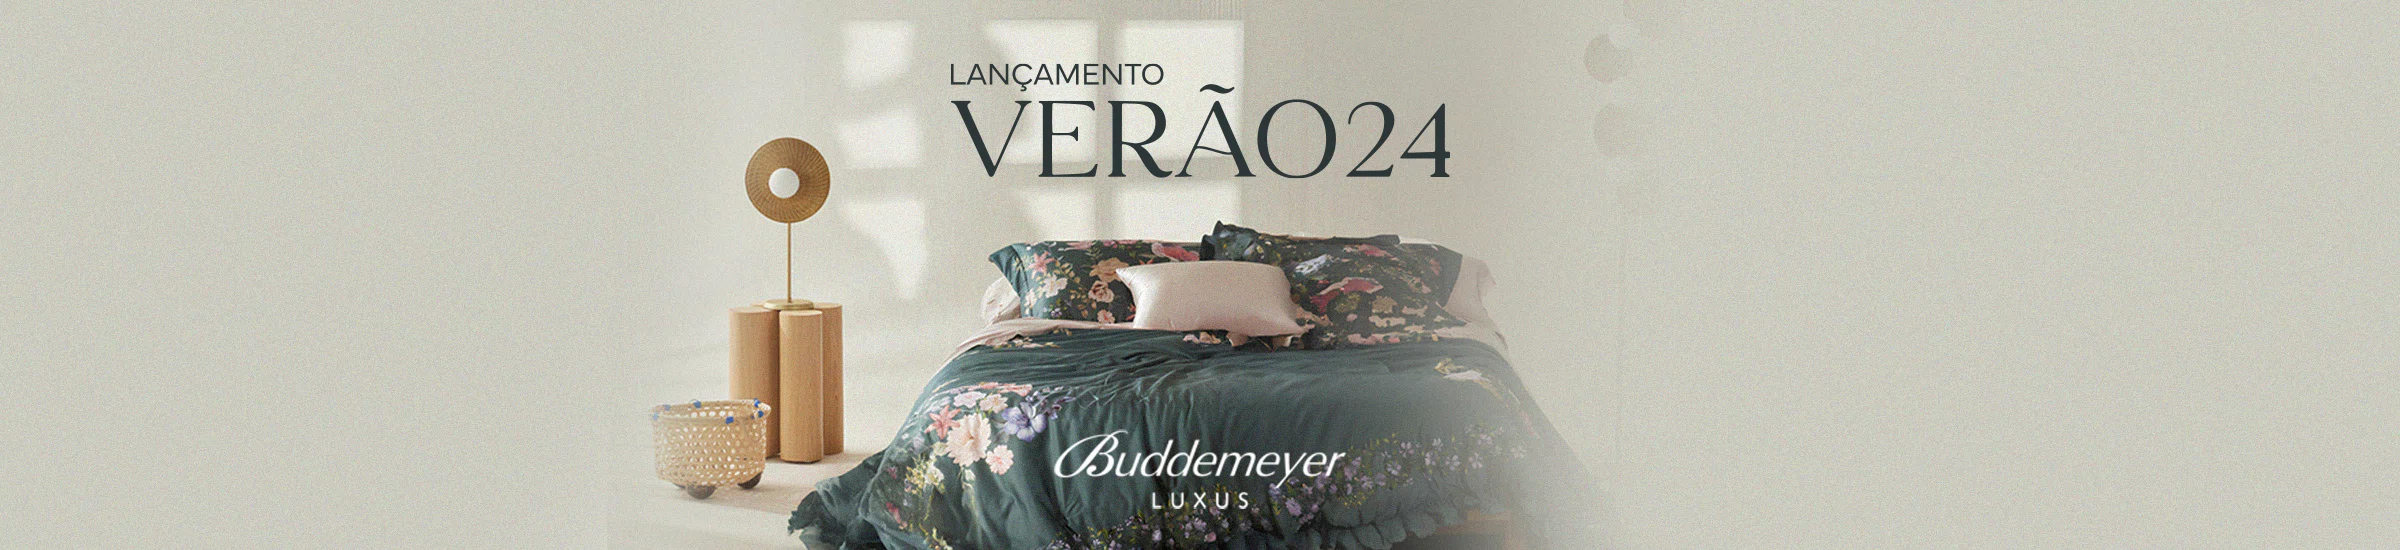 Verão Buddemeyer Luxus